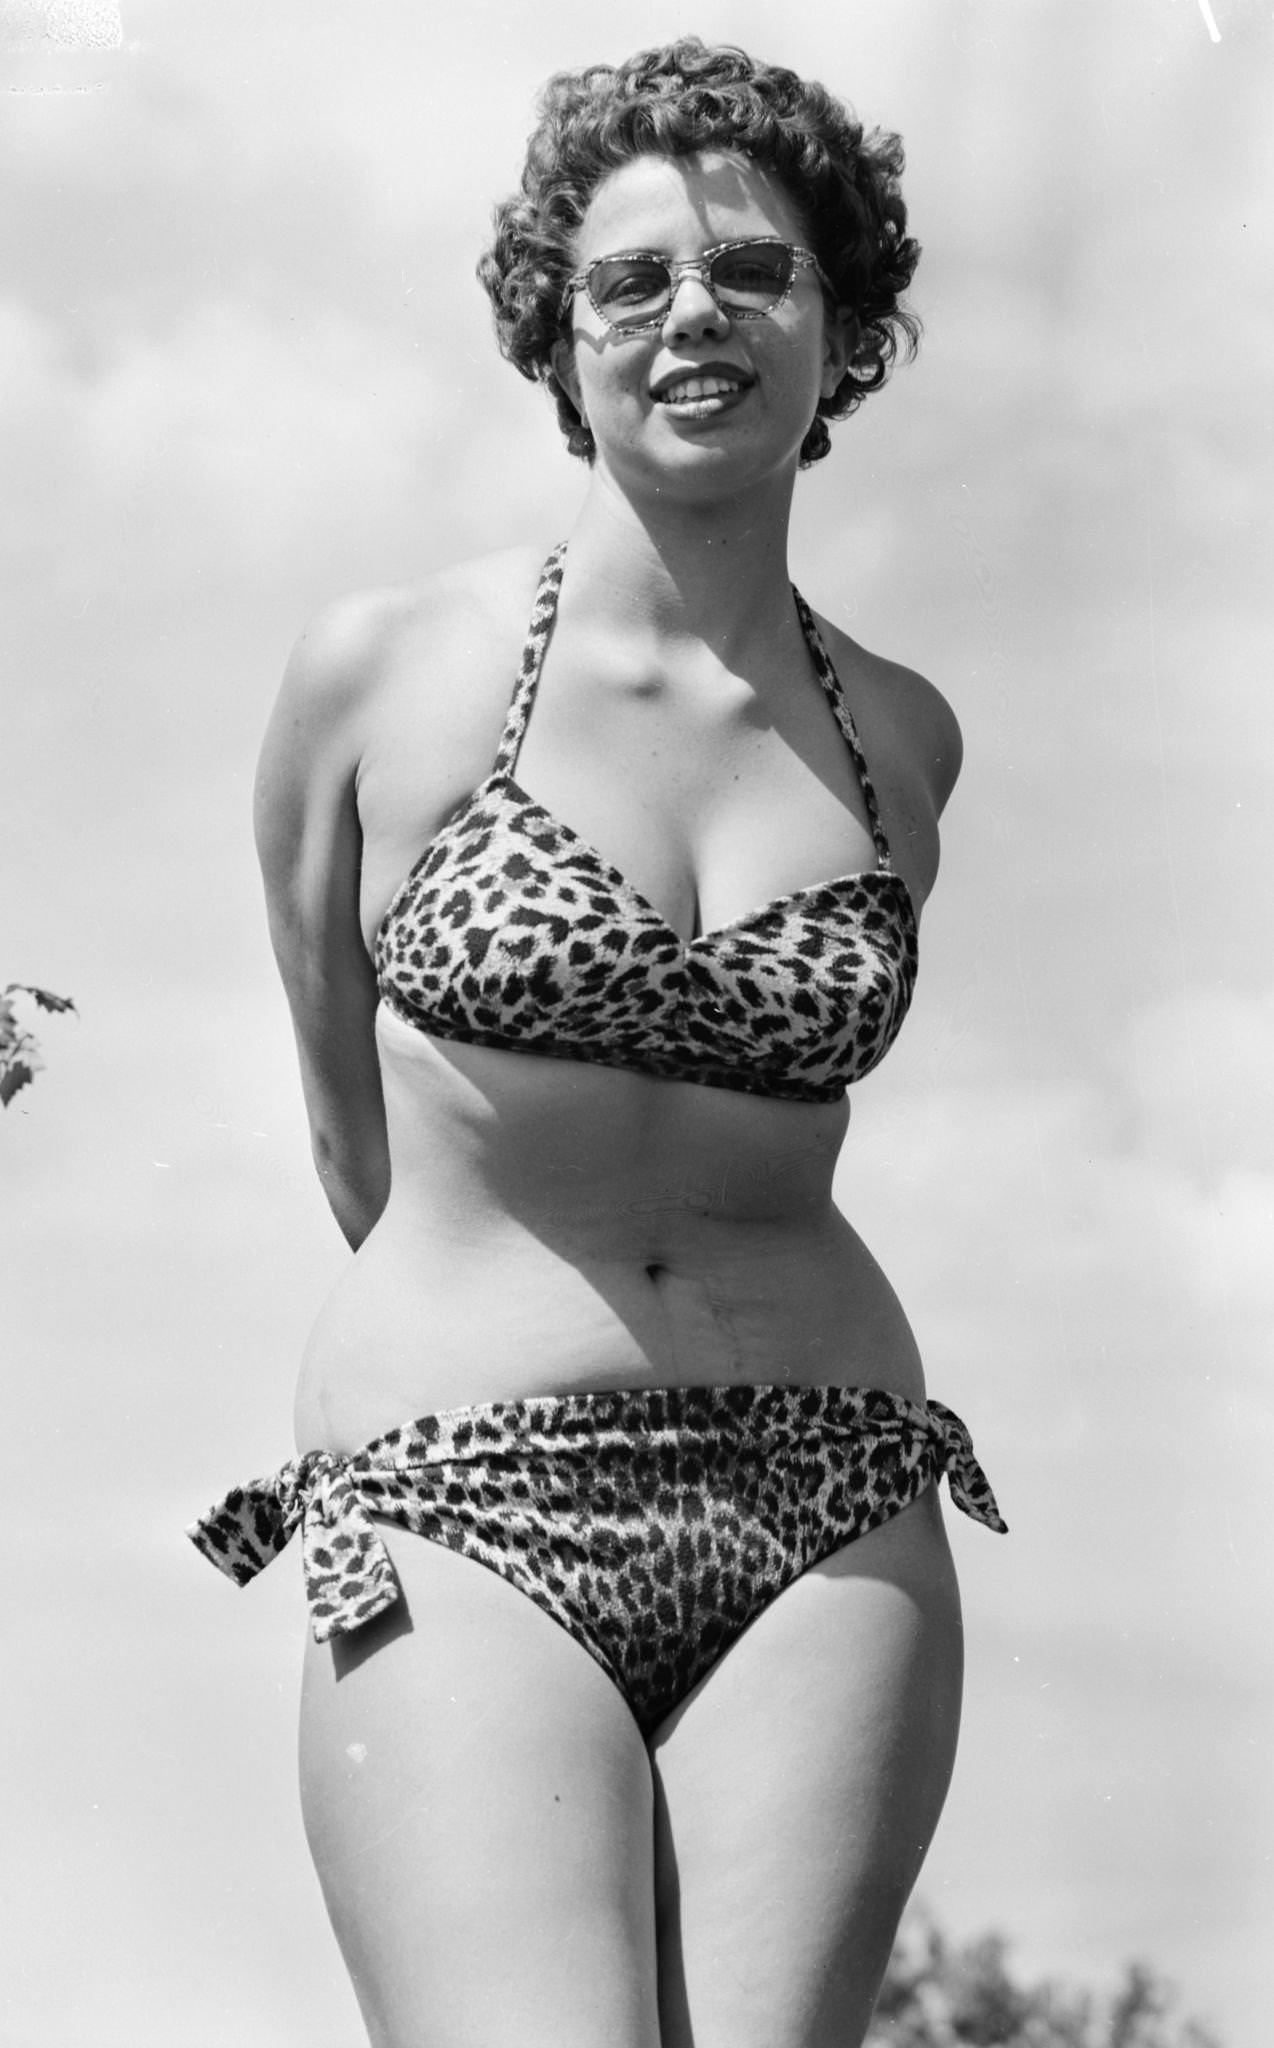 Woman in a leopardskin bikini and sunglasses, 1945.